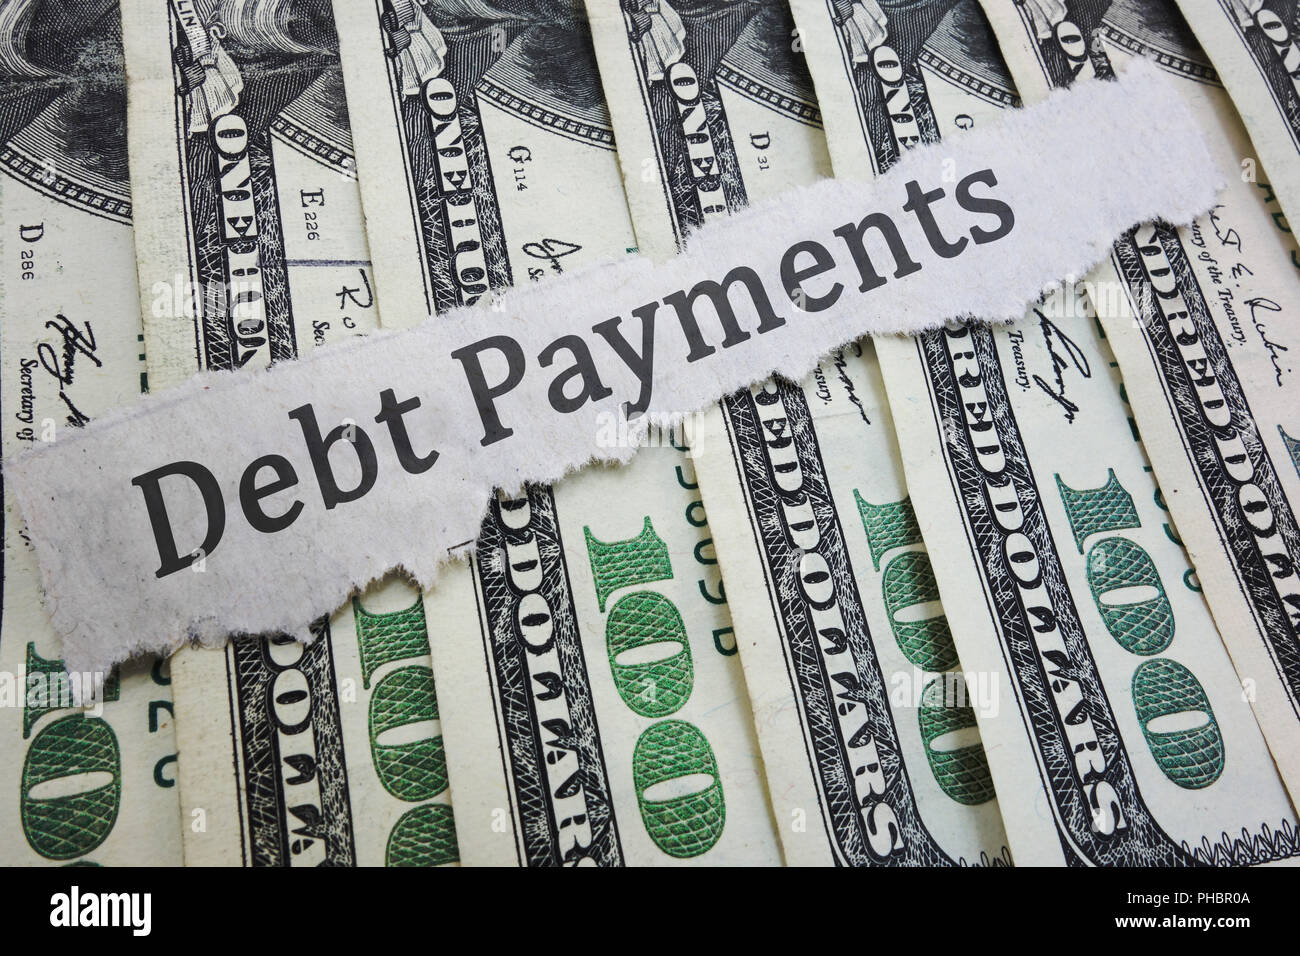 Debt Payment news headline Stock Photo